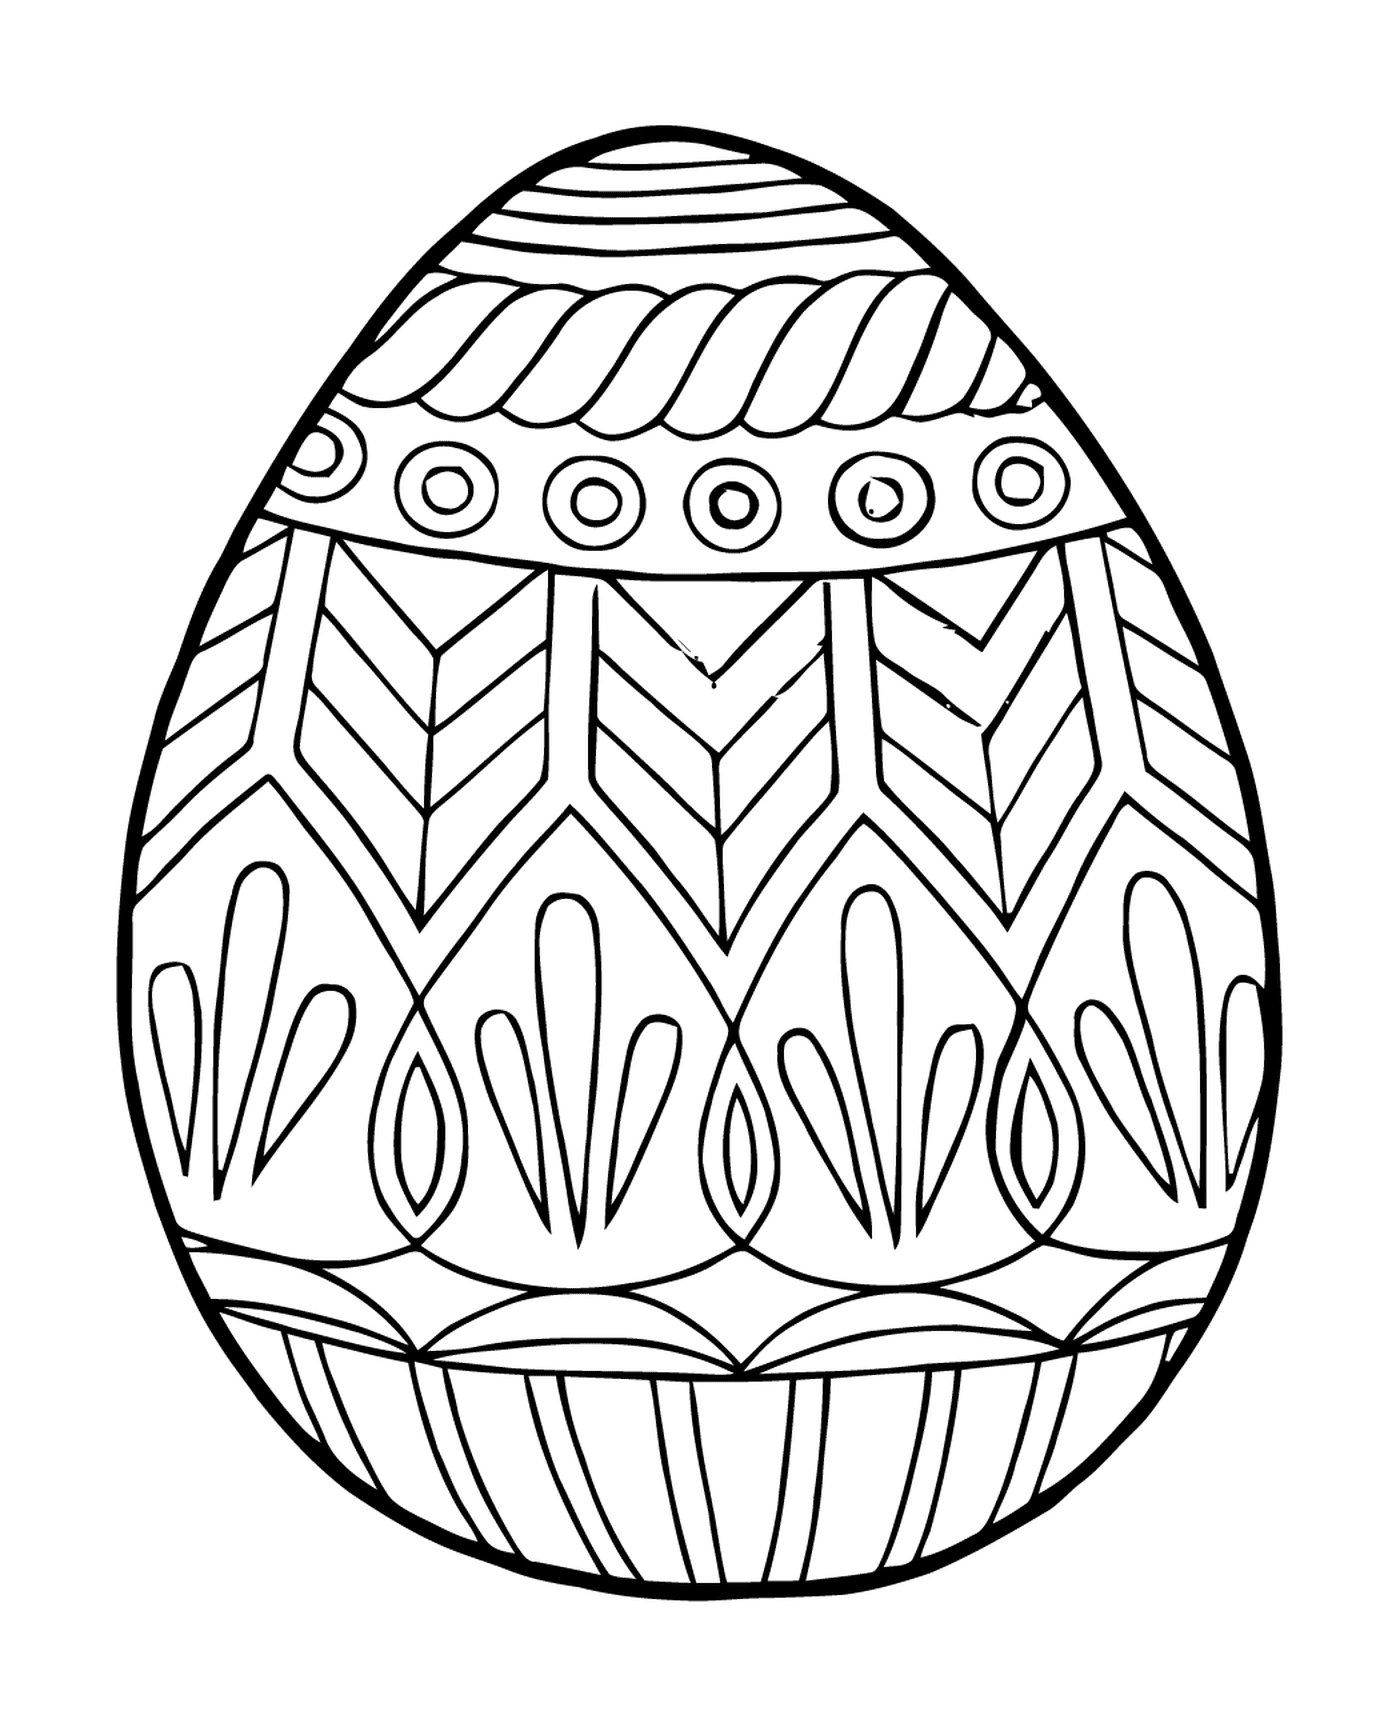  Mandala ausgewachsene Eierpfoten 